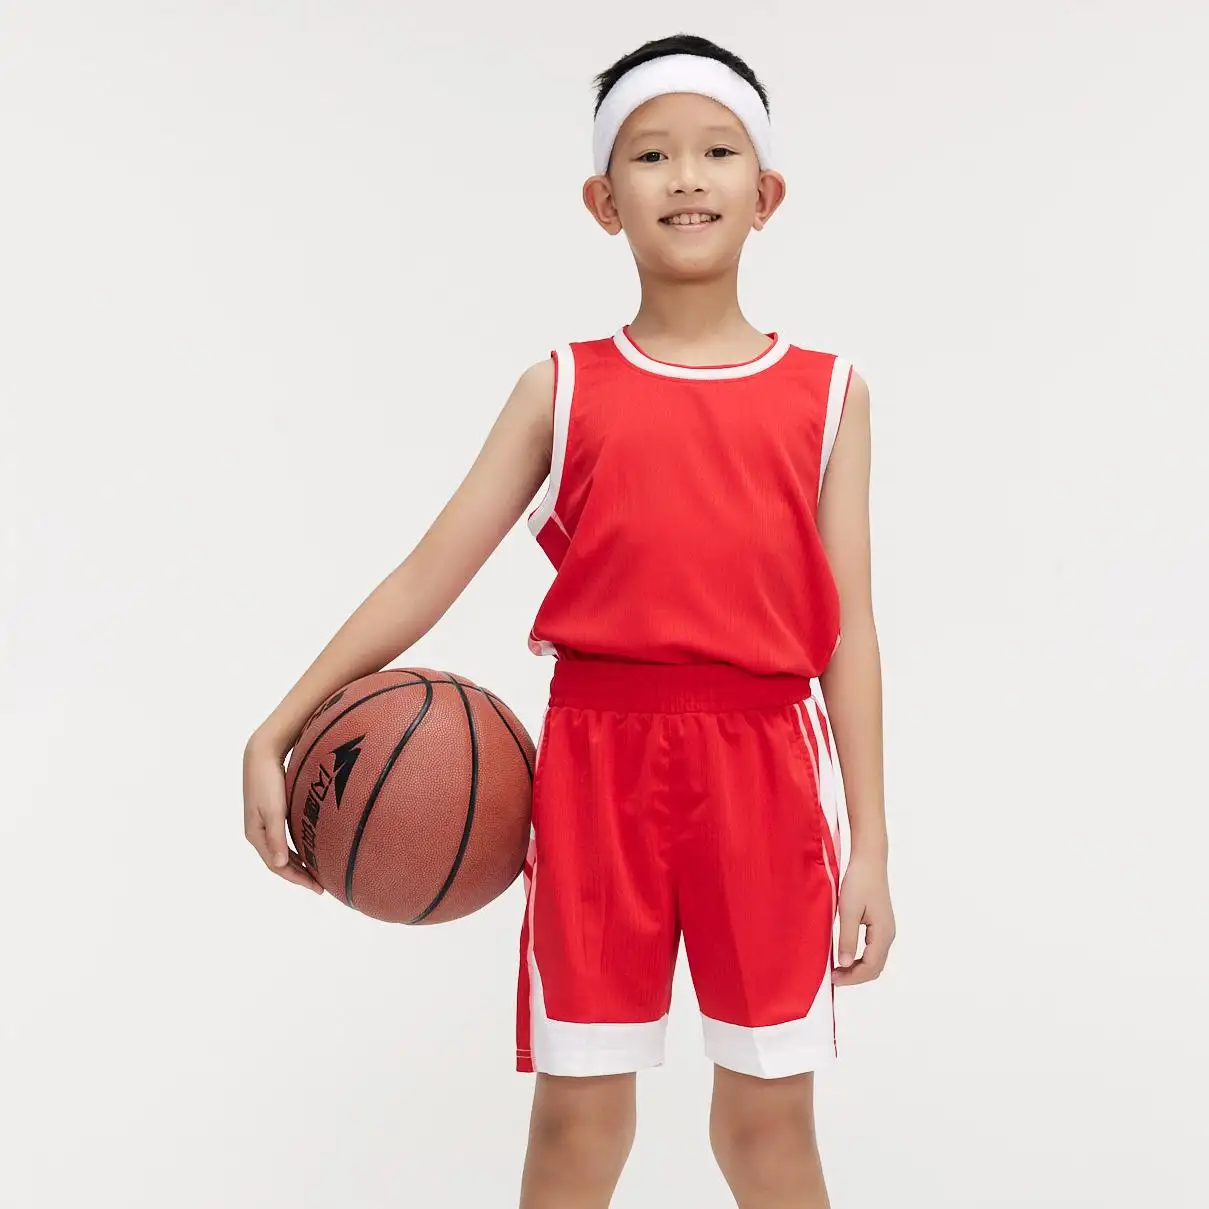 custom logo Children basketball wear blue pink design basketball jersey uniform set for kid